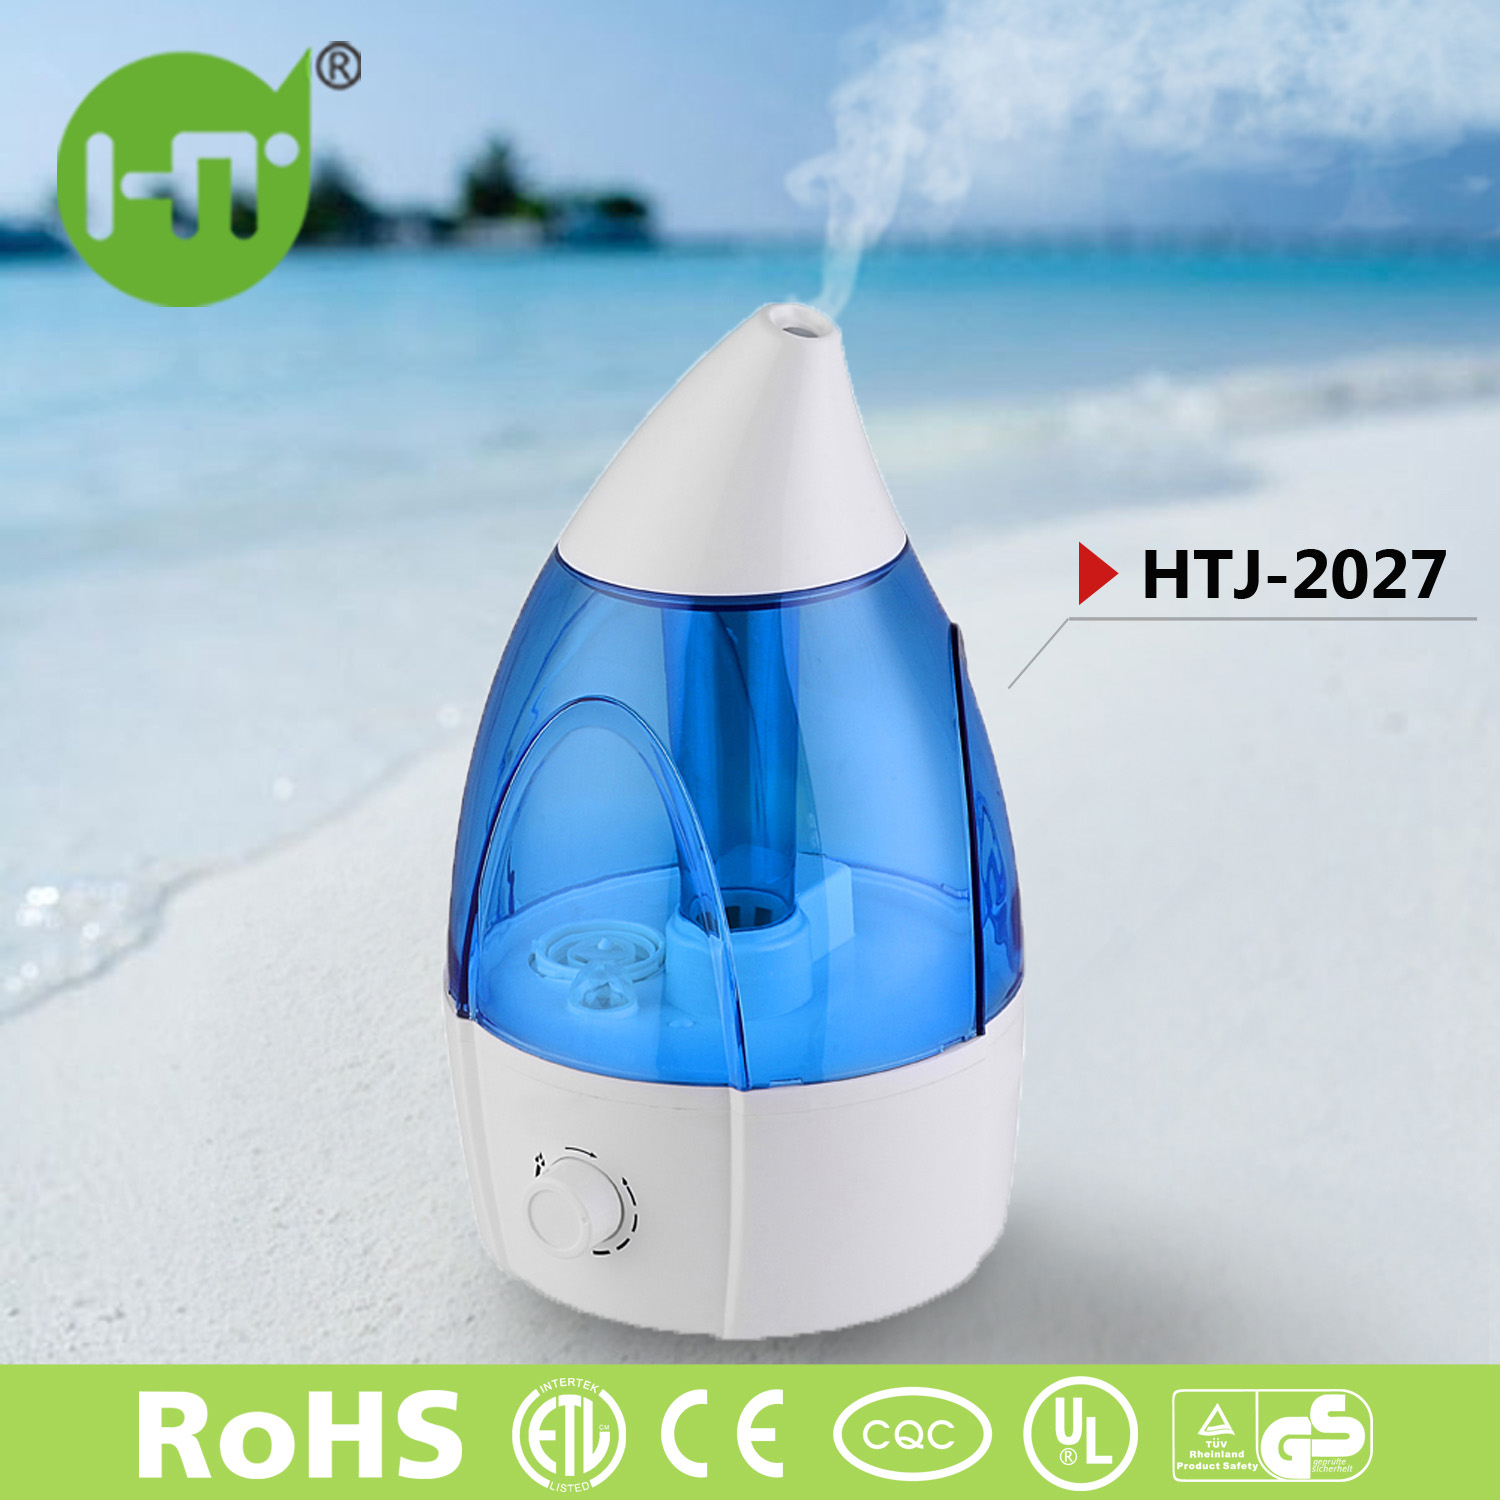 HTJ-2027 3.0L LED Cool Mist Spray Humidifier